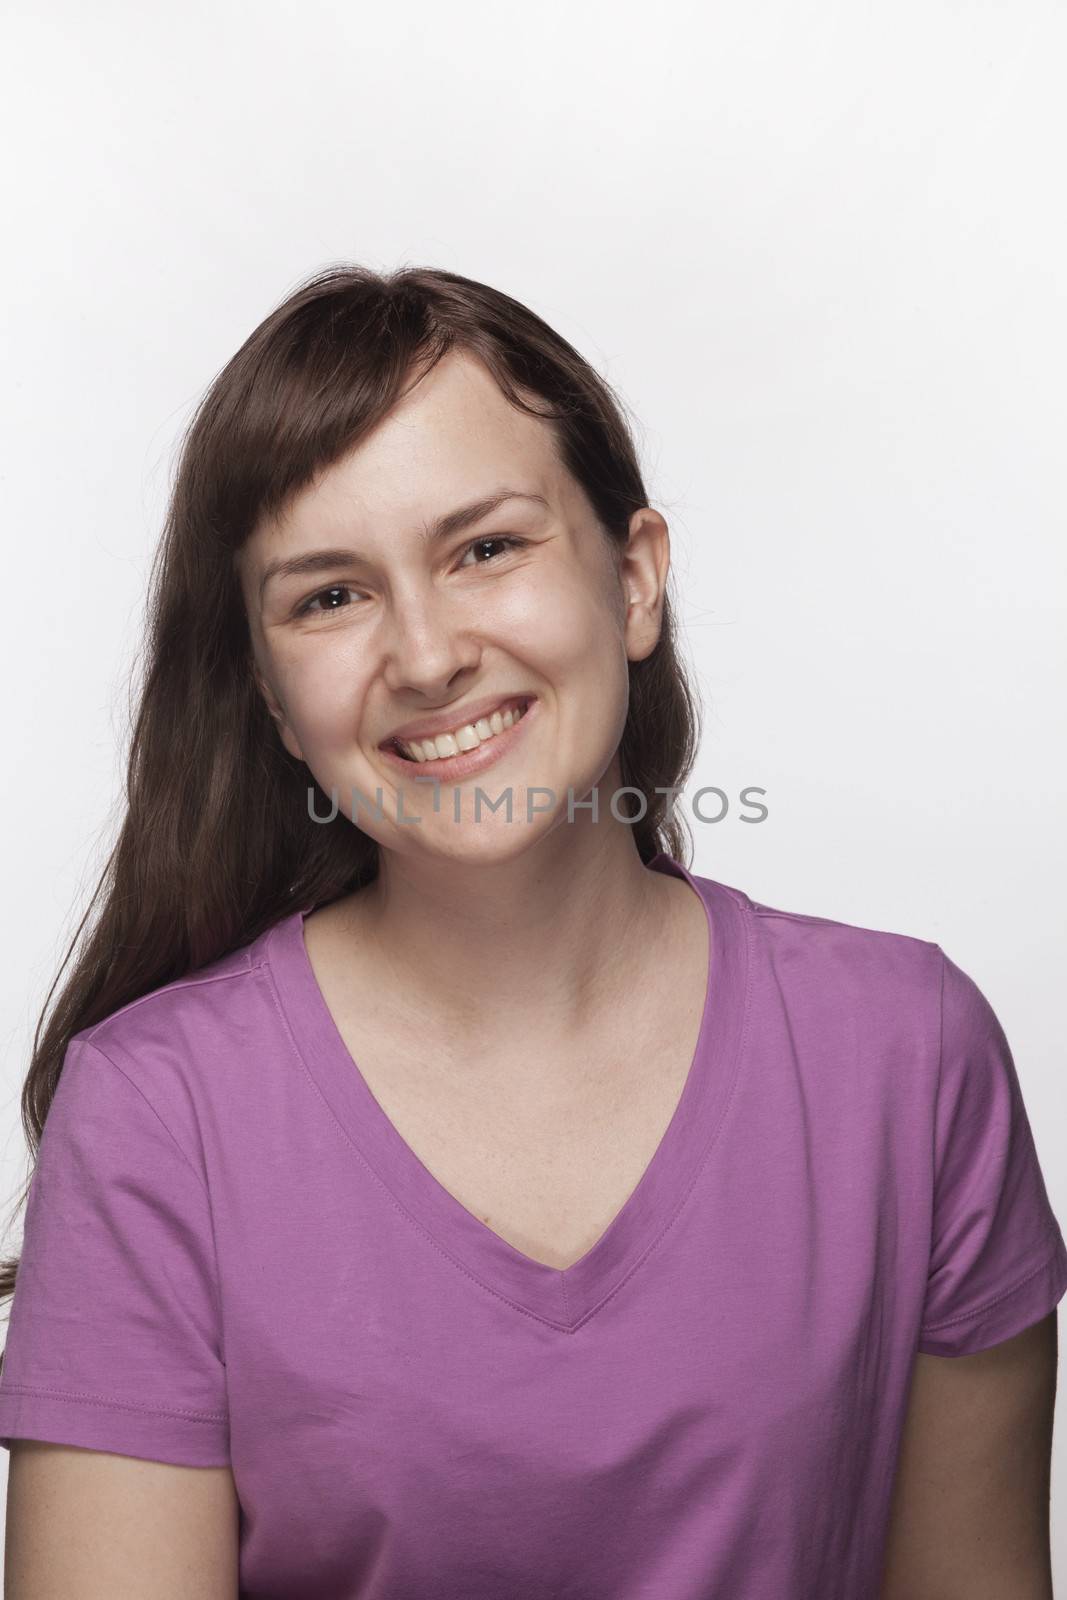 Portrait of smiling young woman in purple t-shirt, studio shot